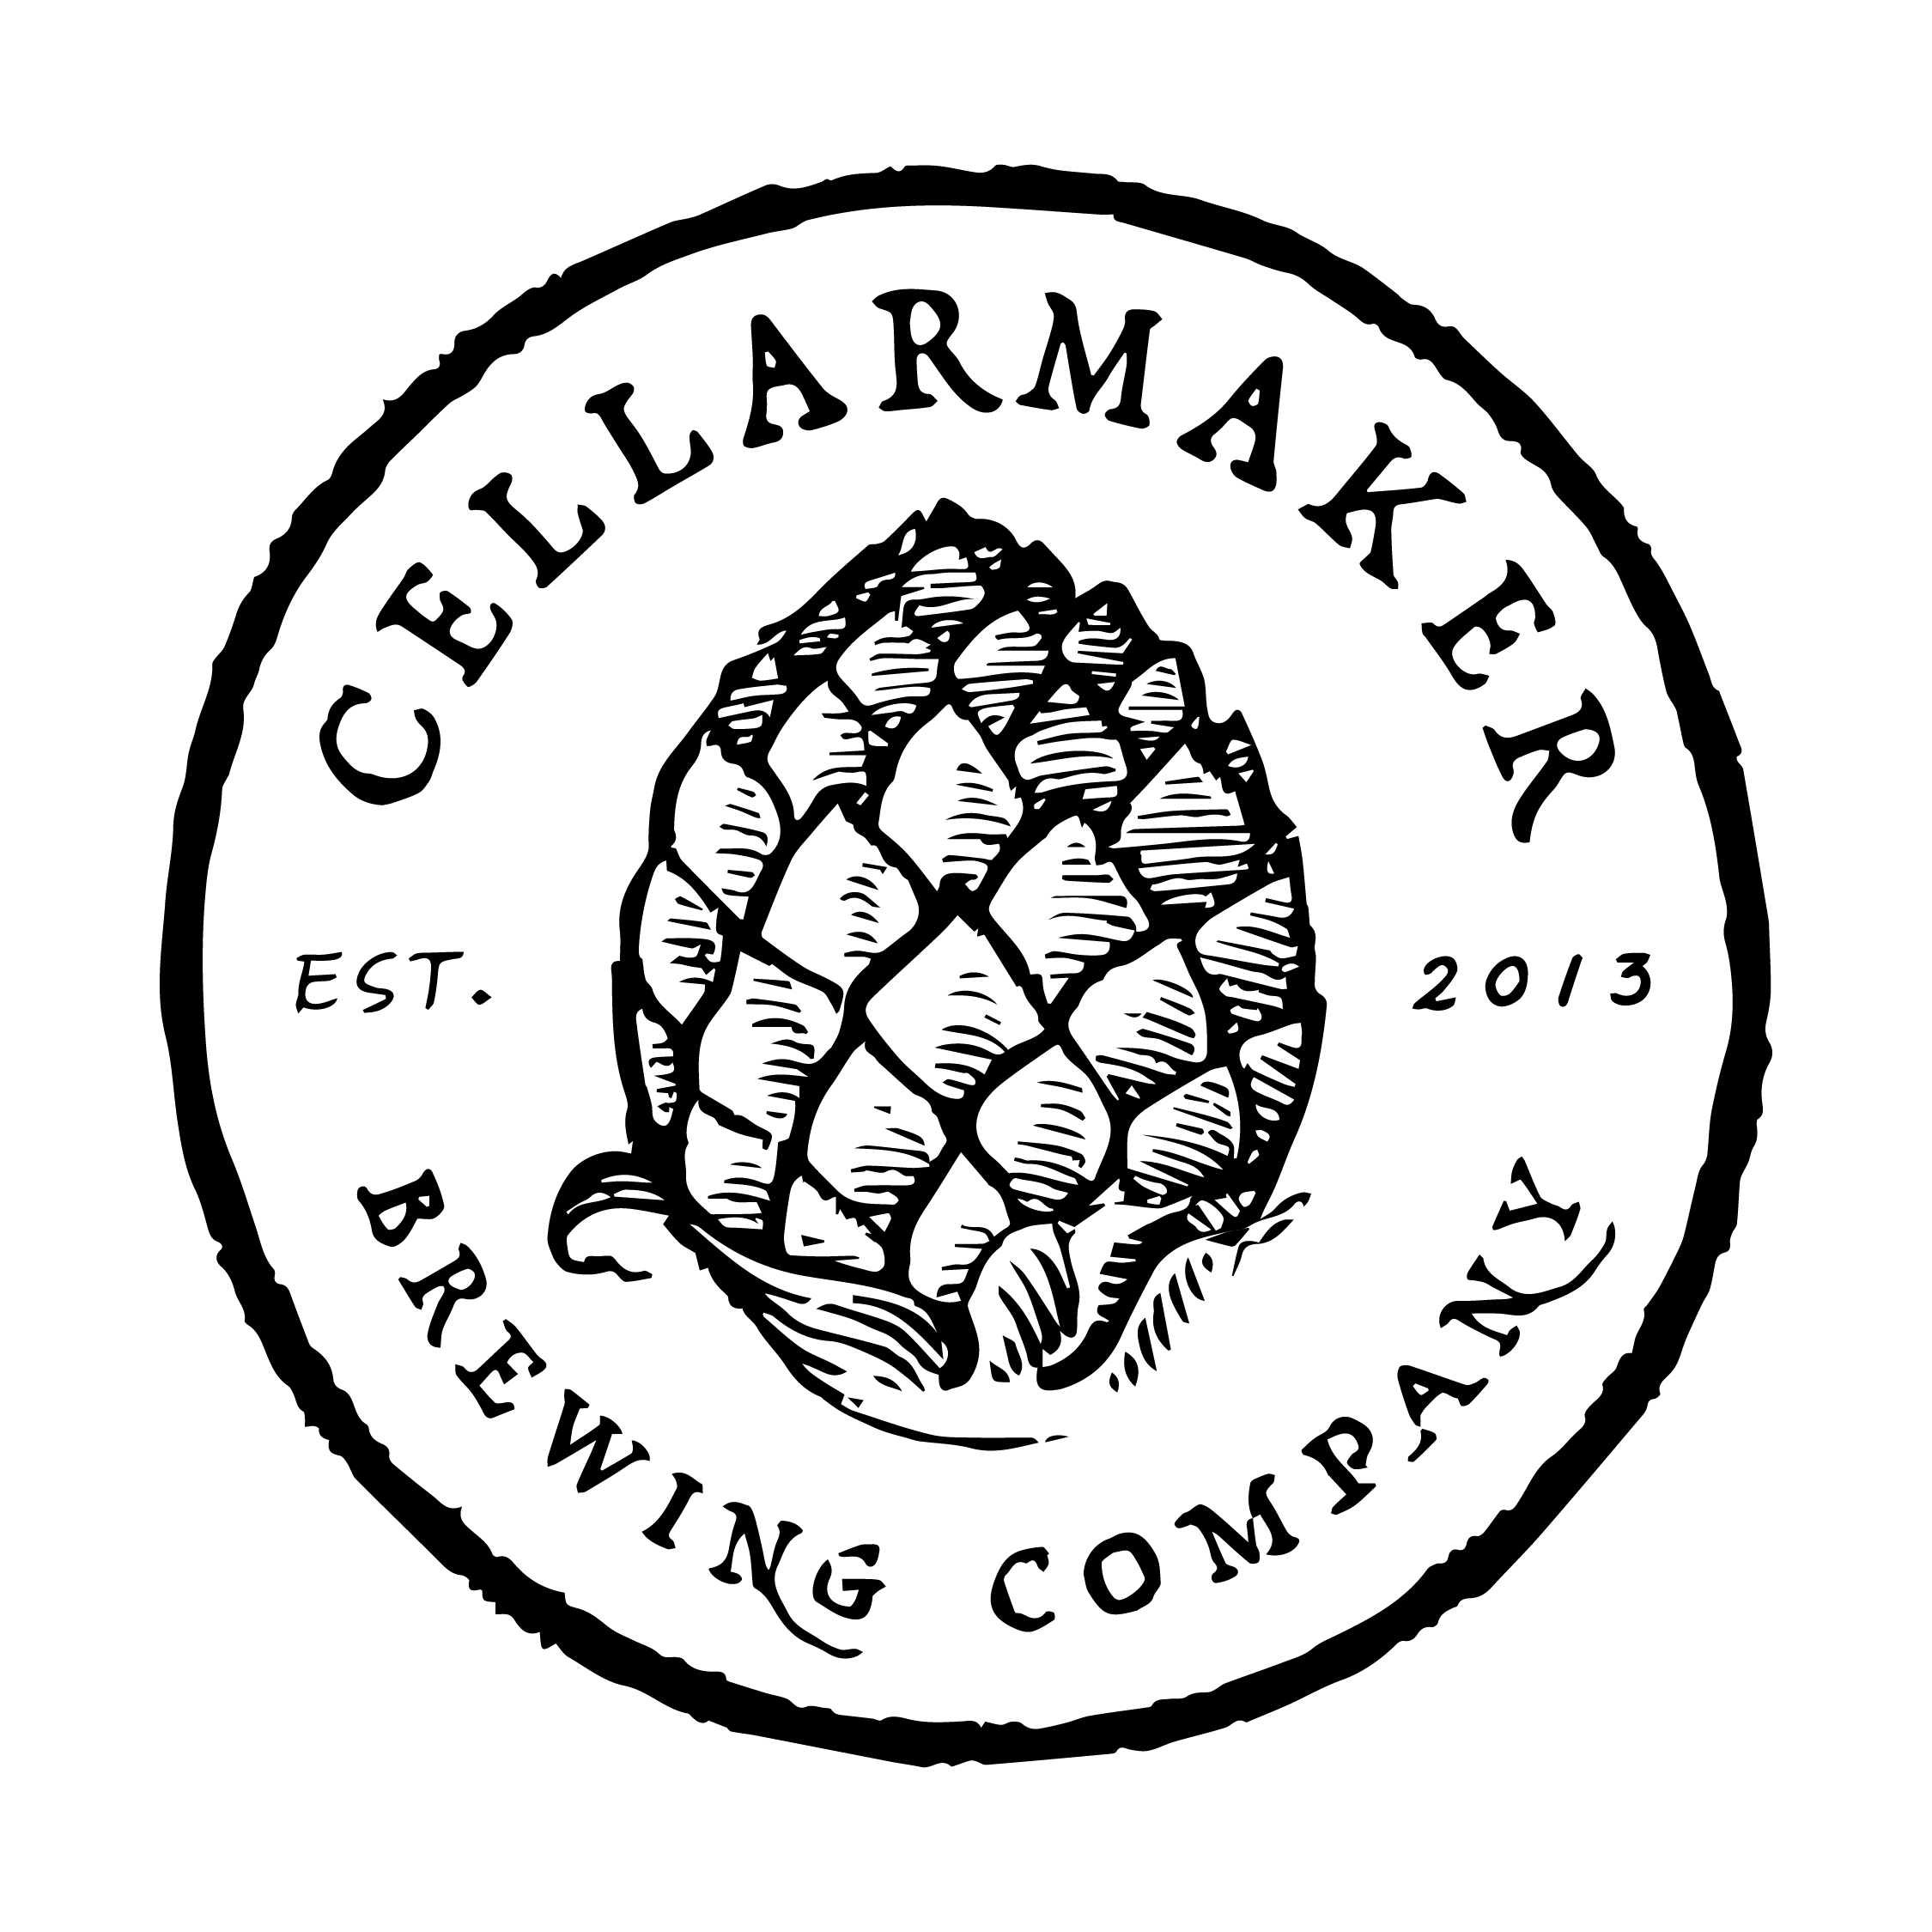 cellarmaker logo